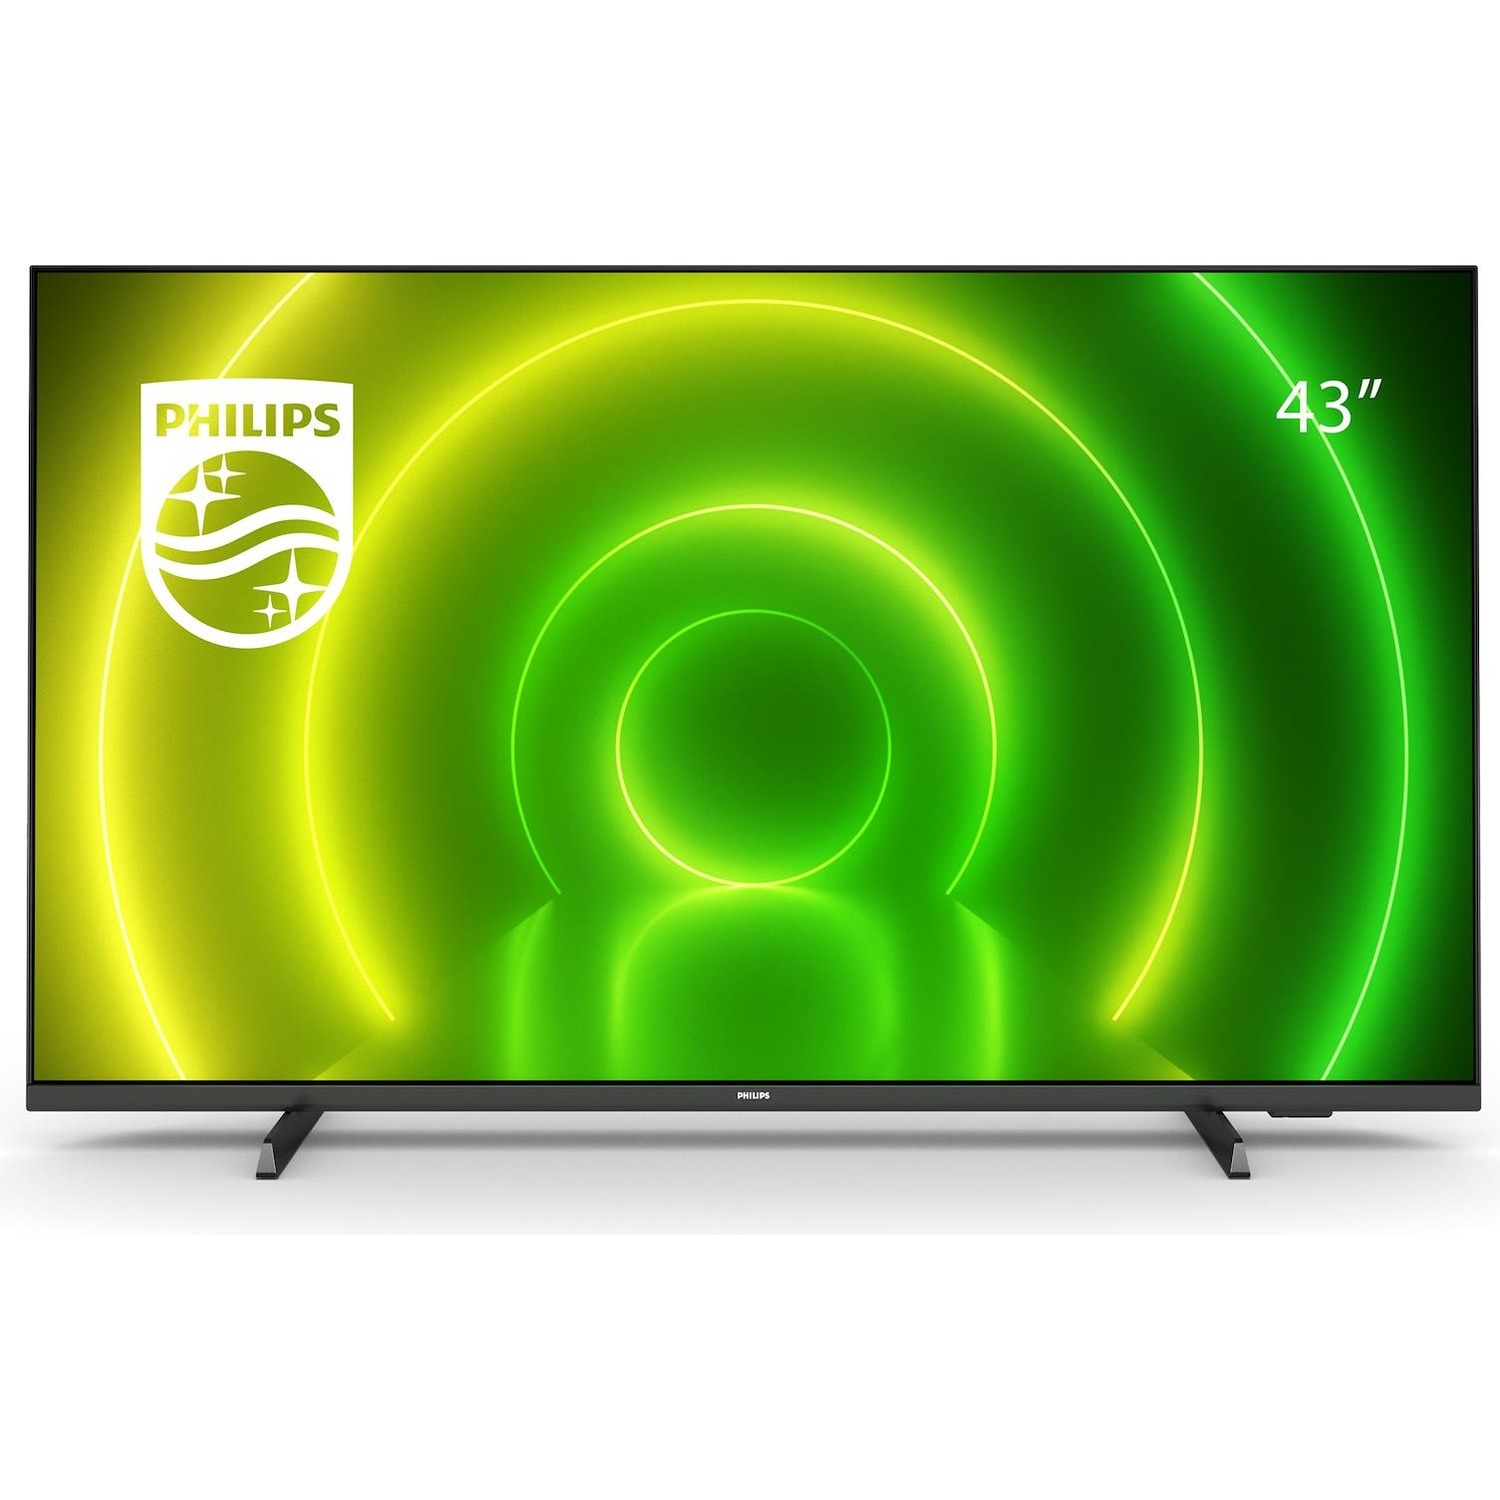 Immagine per TV LED 4K UHD Smart Philips 43PUS7406 da DIMOStore